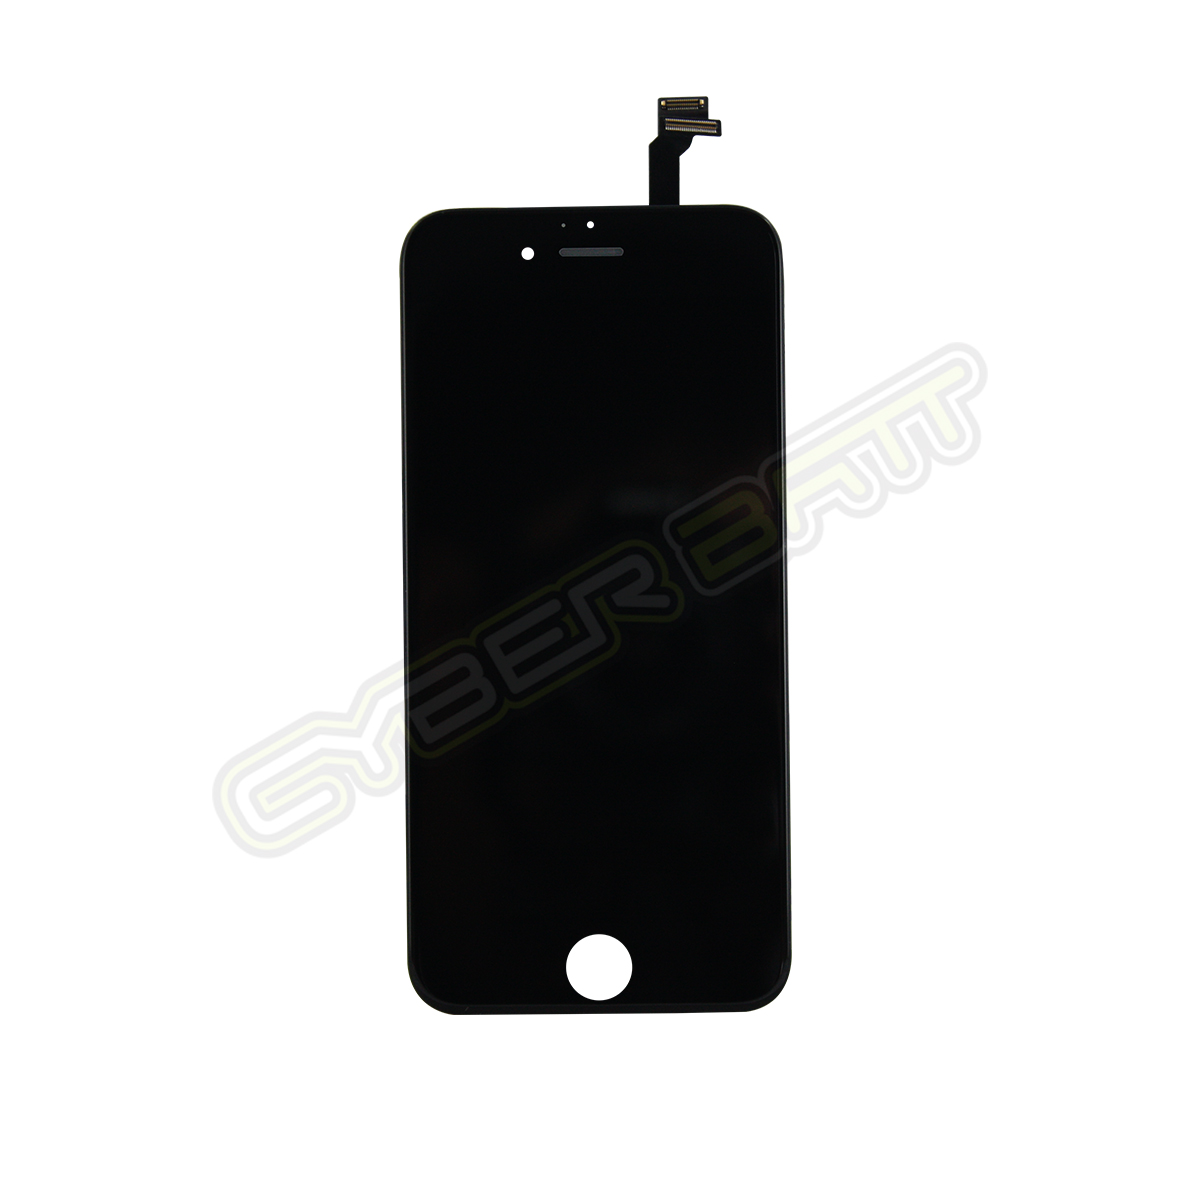 iPhone 6 LCD Black หน้าจอไอโฟน 6 สีดำ